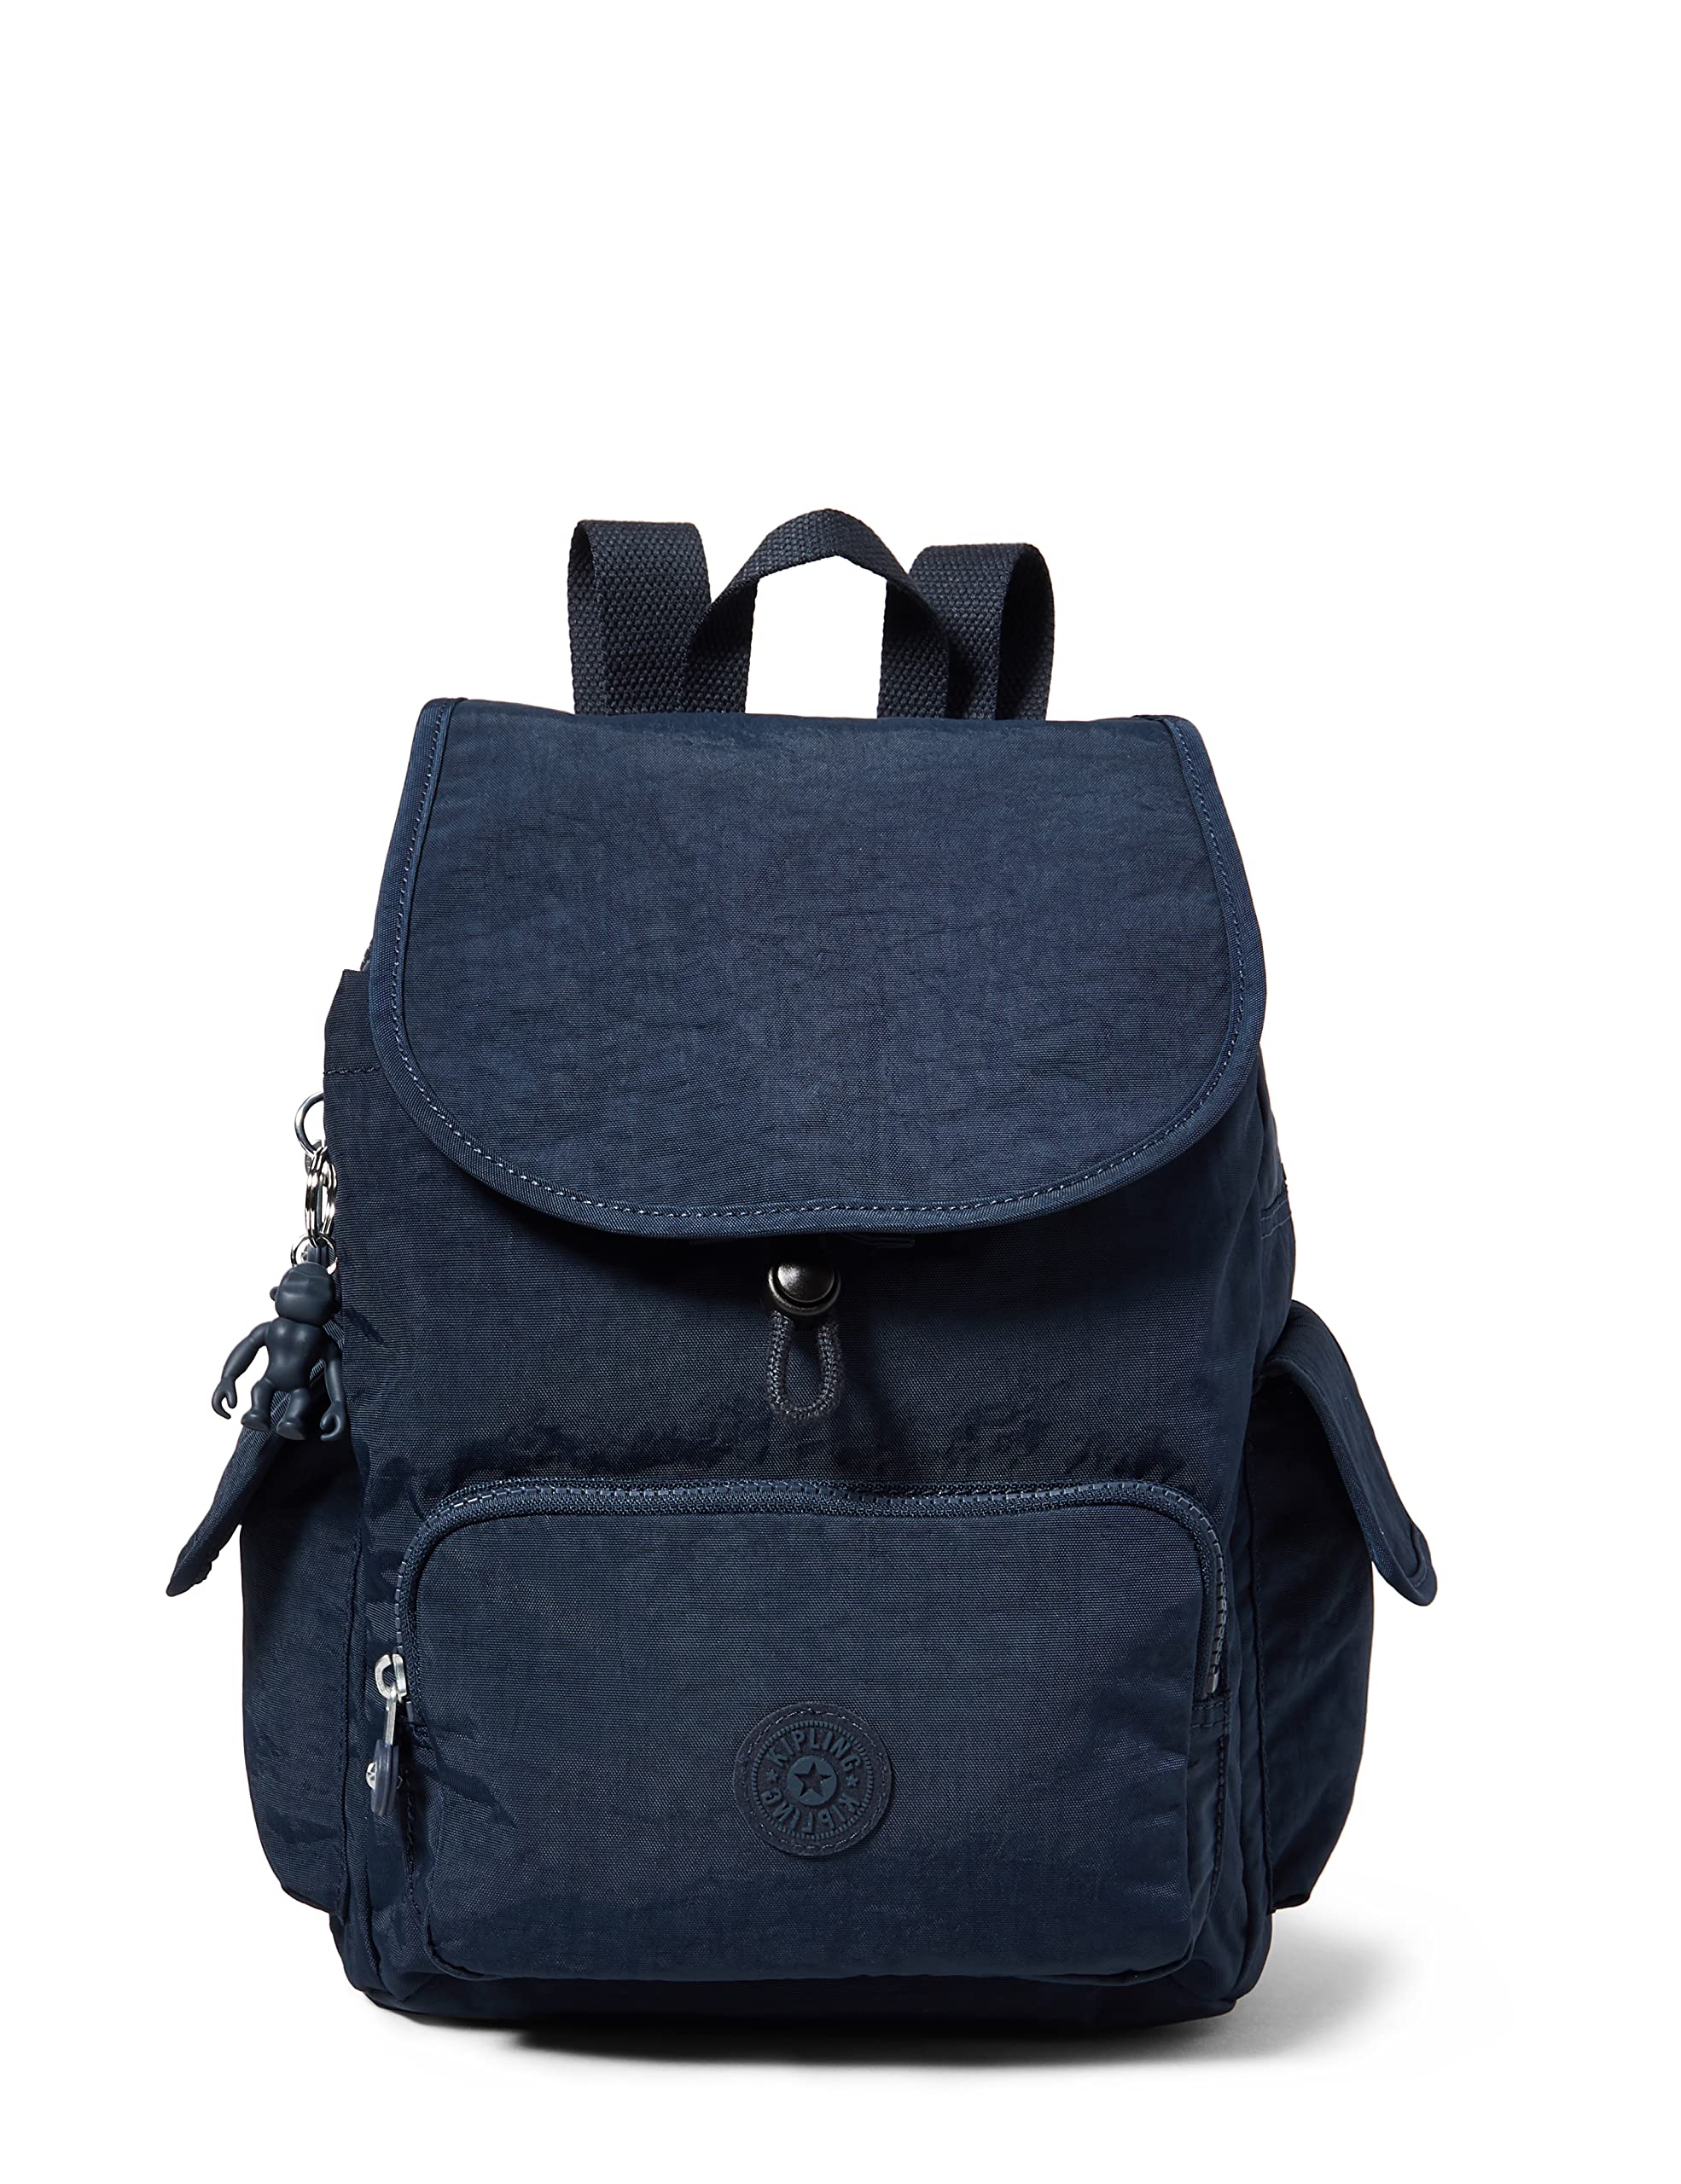 Kipling Women's City Pack Small Backpack, Lightweight Versatile Daypack, Bag, Blue Bleu 2